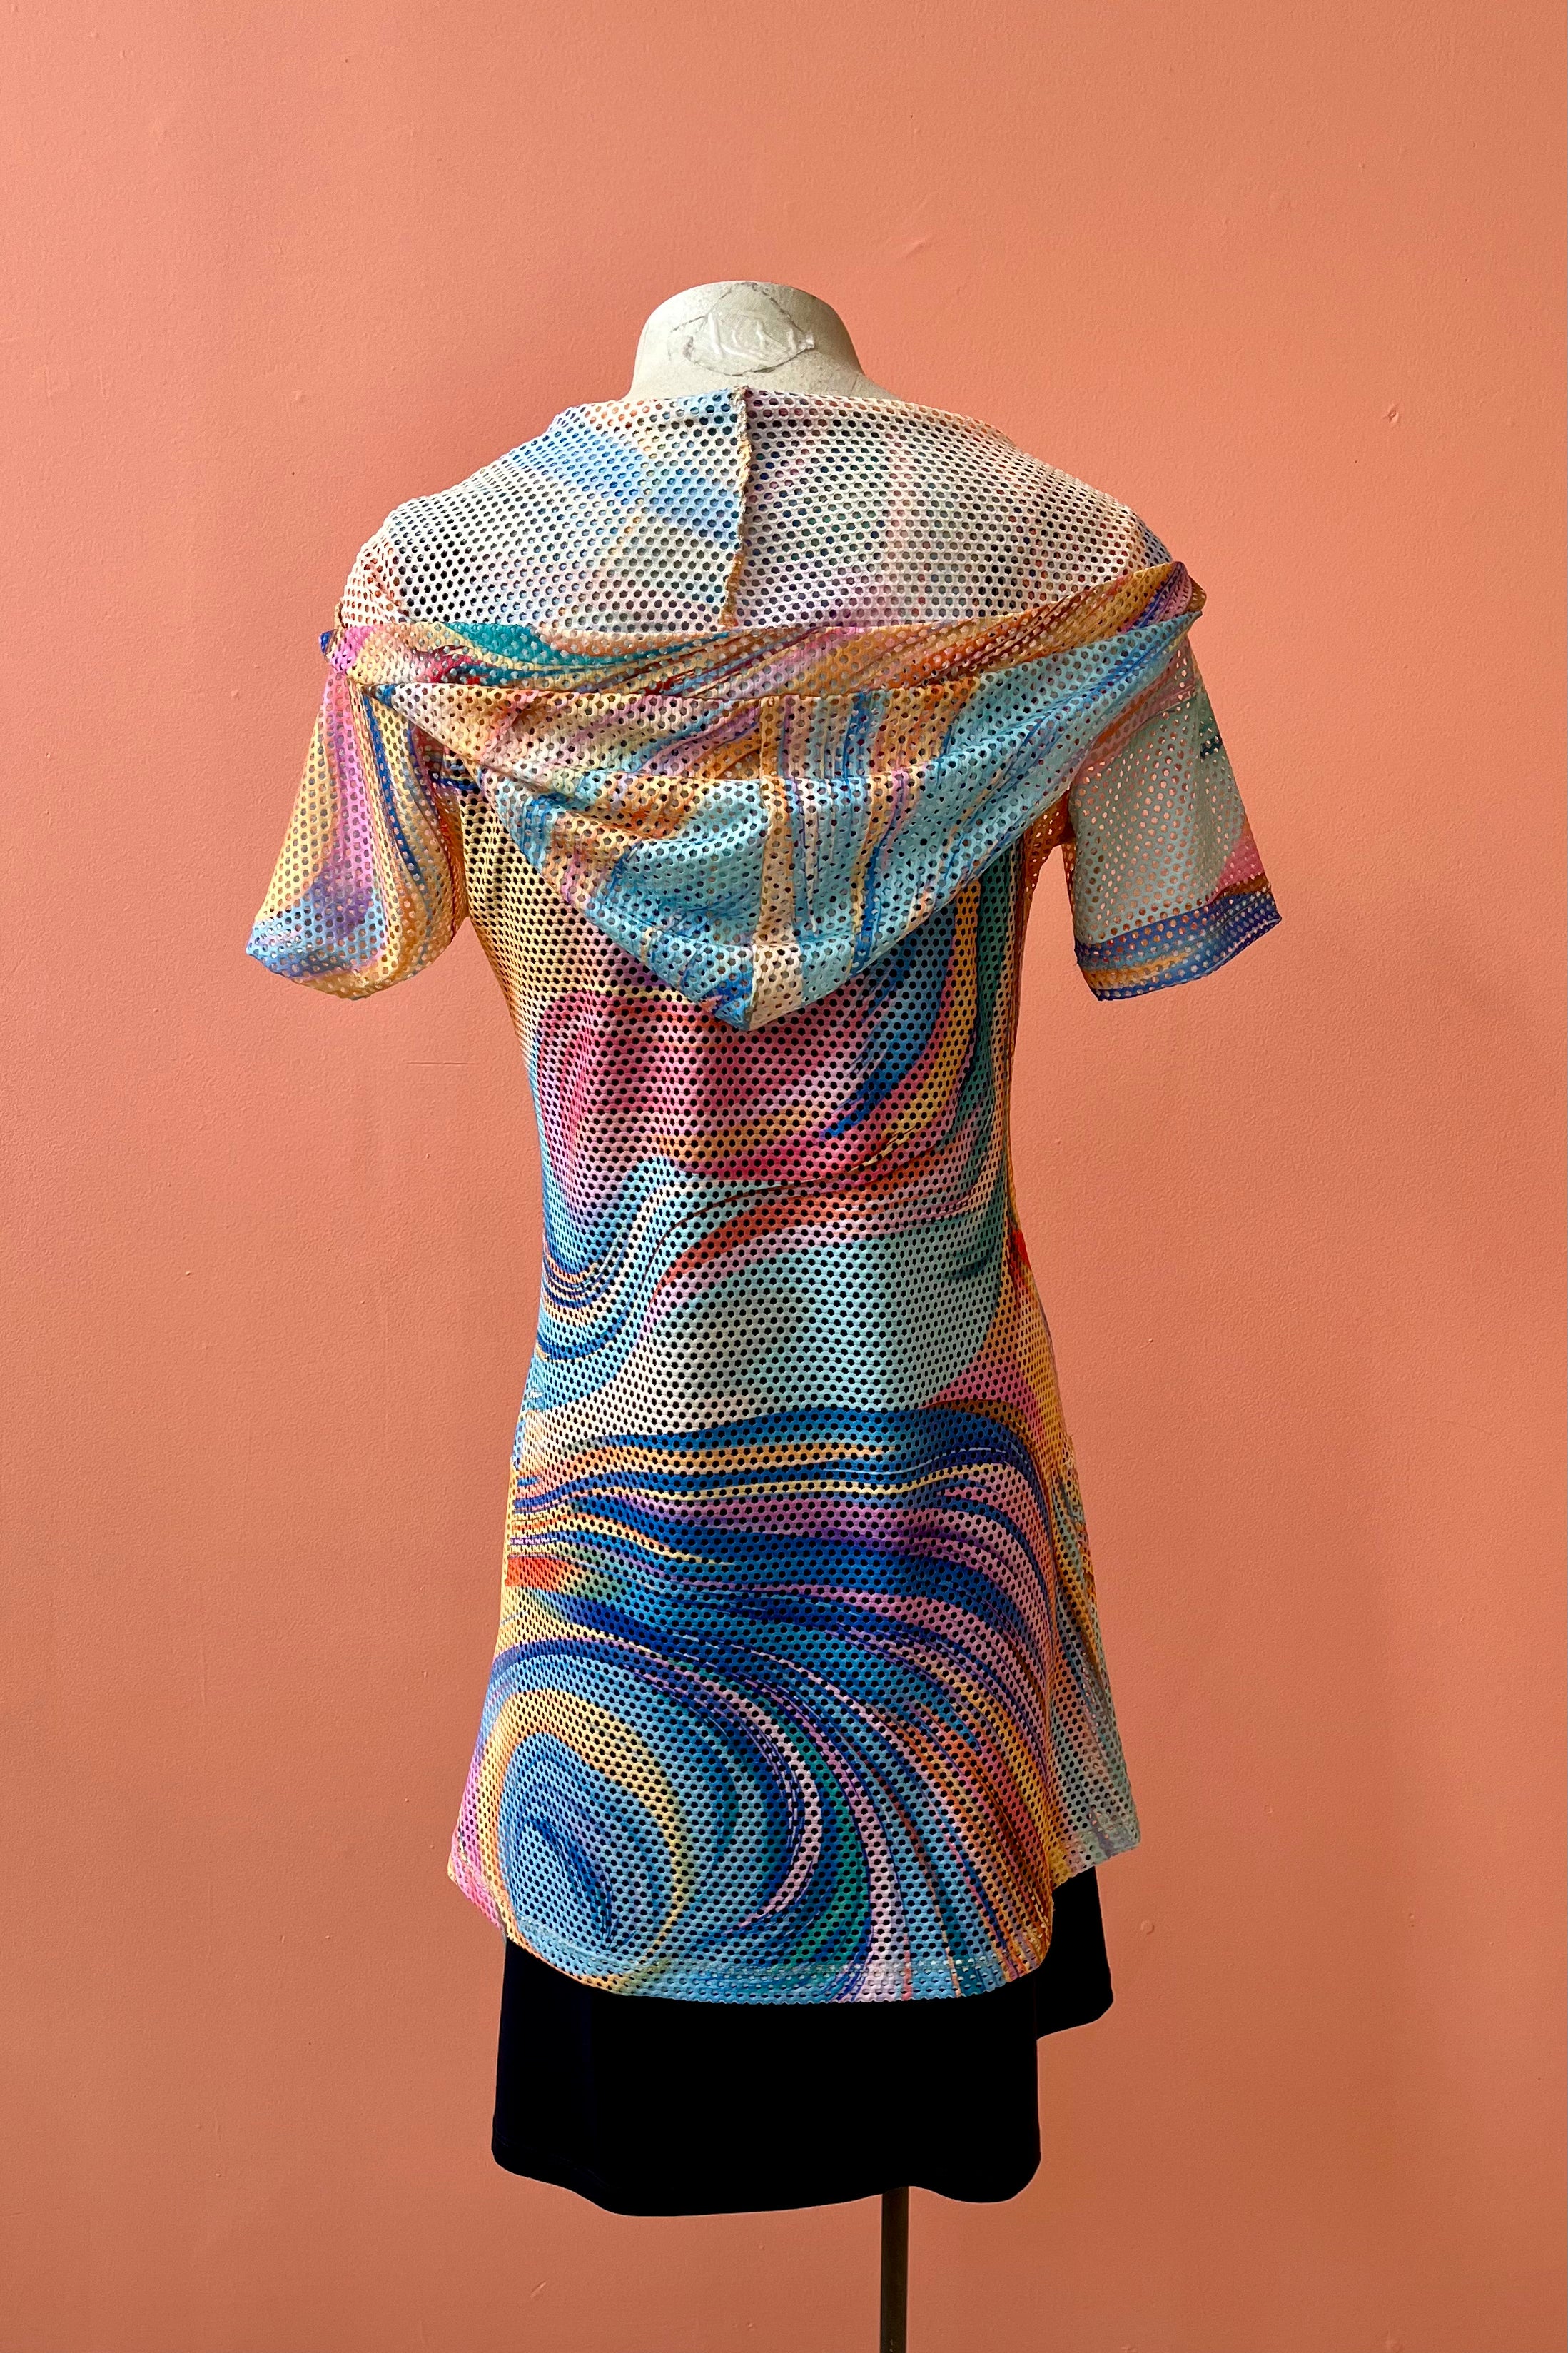 Vib Hoodie by Yul Voy, back view, pastel swirl pattern, lightweight mesh, short sleeves, kangaroo pocket, tunic length, sizes XS to XXL, made in Montreal